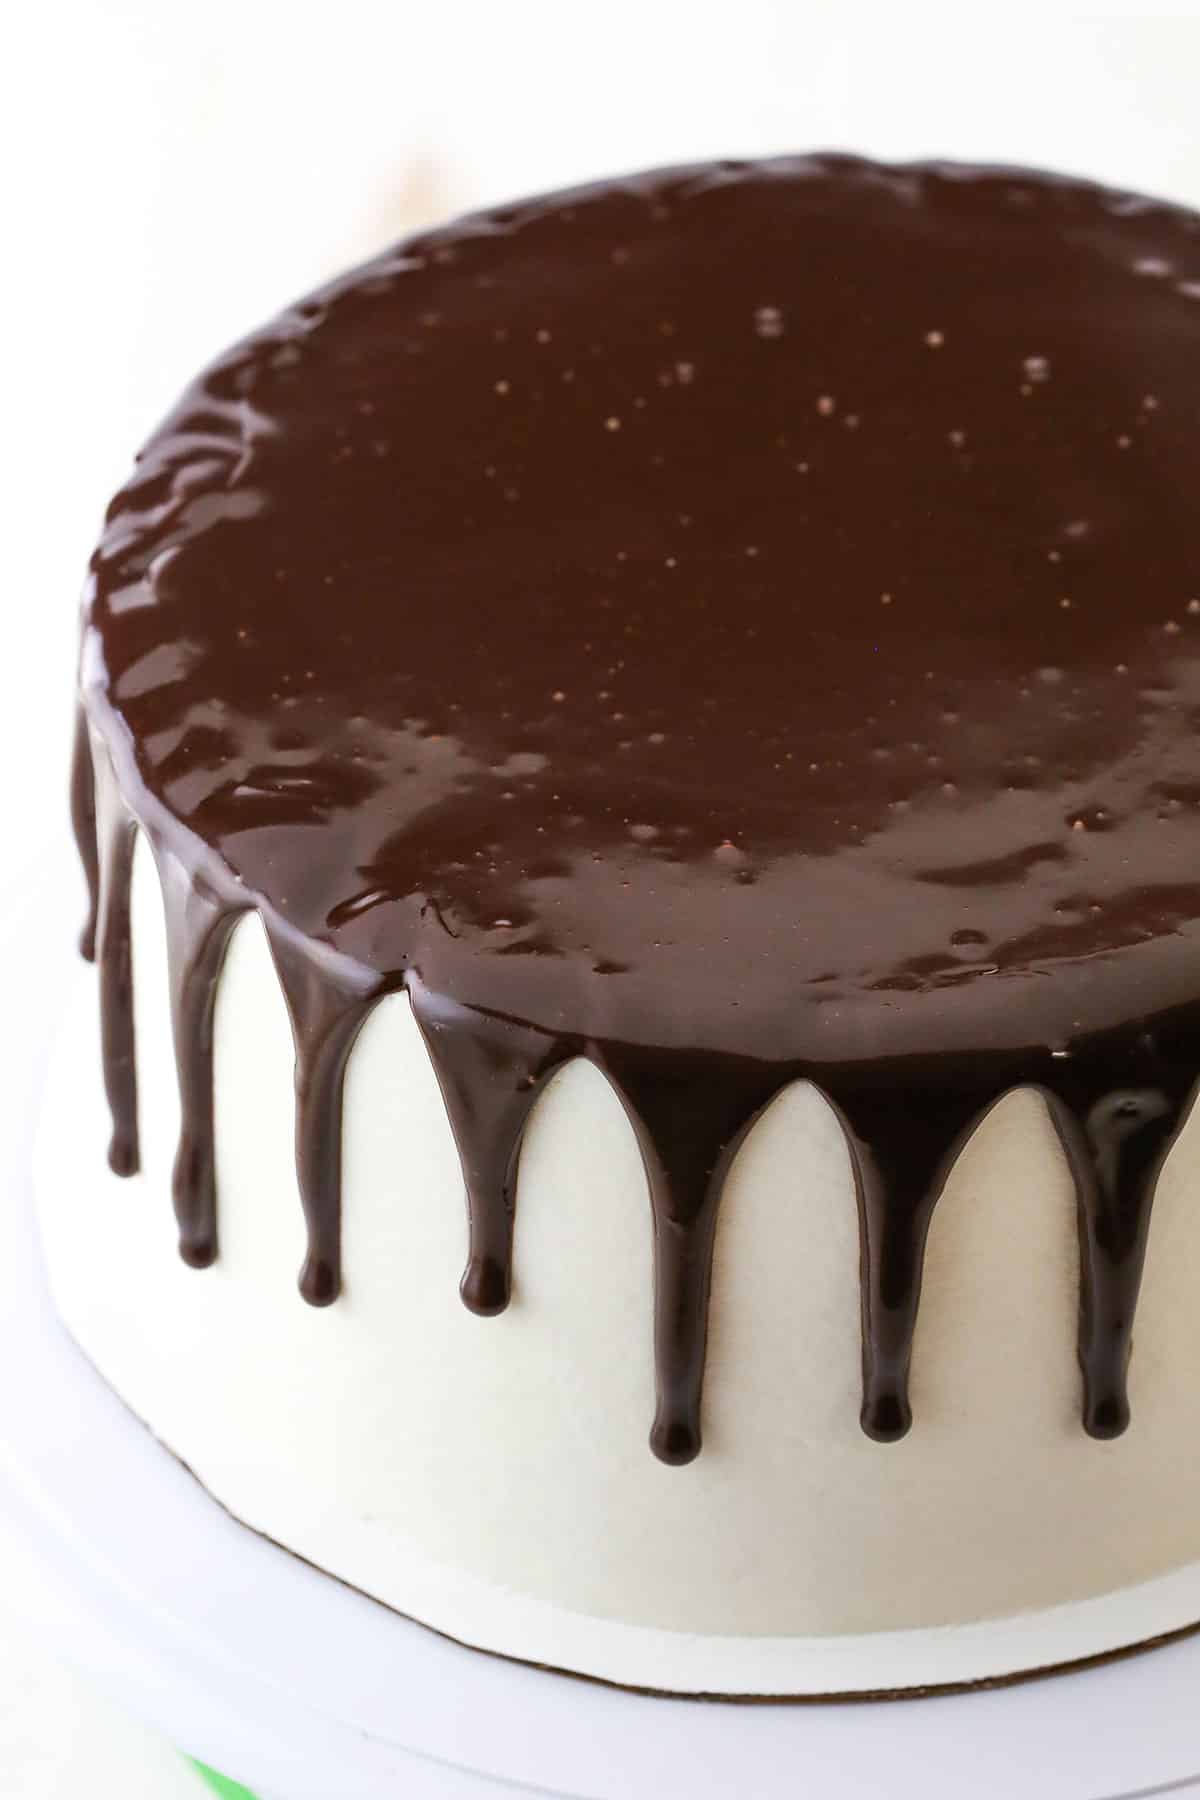 Make Perfect Drip Cakes (with 30 design ideas!) - Amycakes Bakes